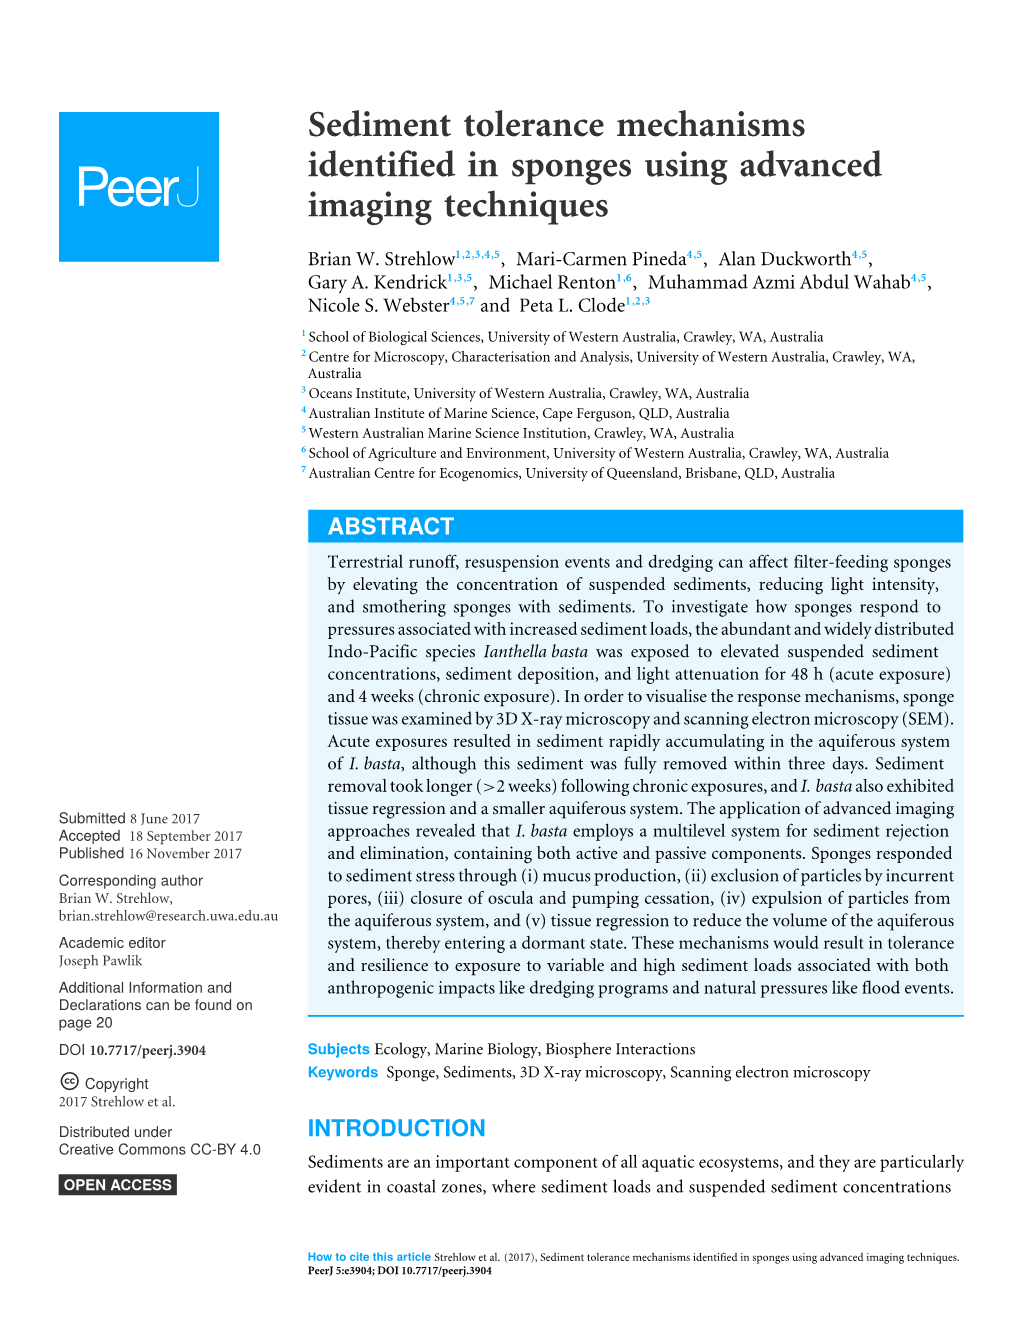 Sediment Tolerance Mechanisms Identified in Sponges Using Advanced Imaging Techniques